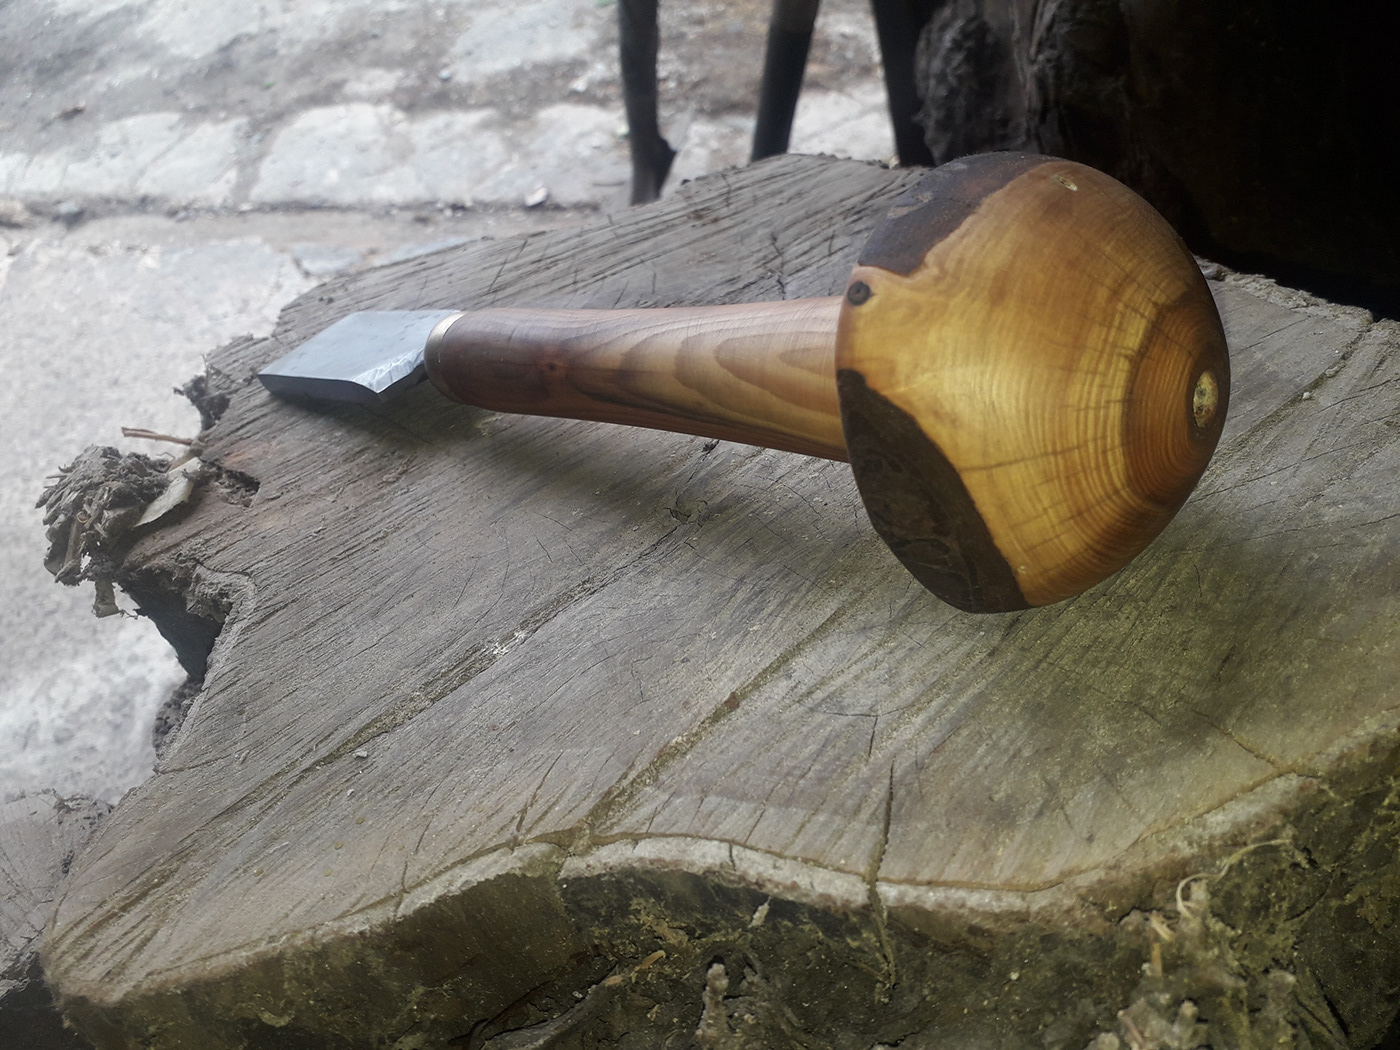 Custom custom design custom made tools design Irish design irish yew patrick sweeney design wood design woodturning